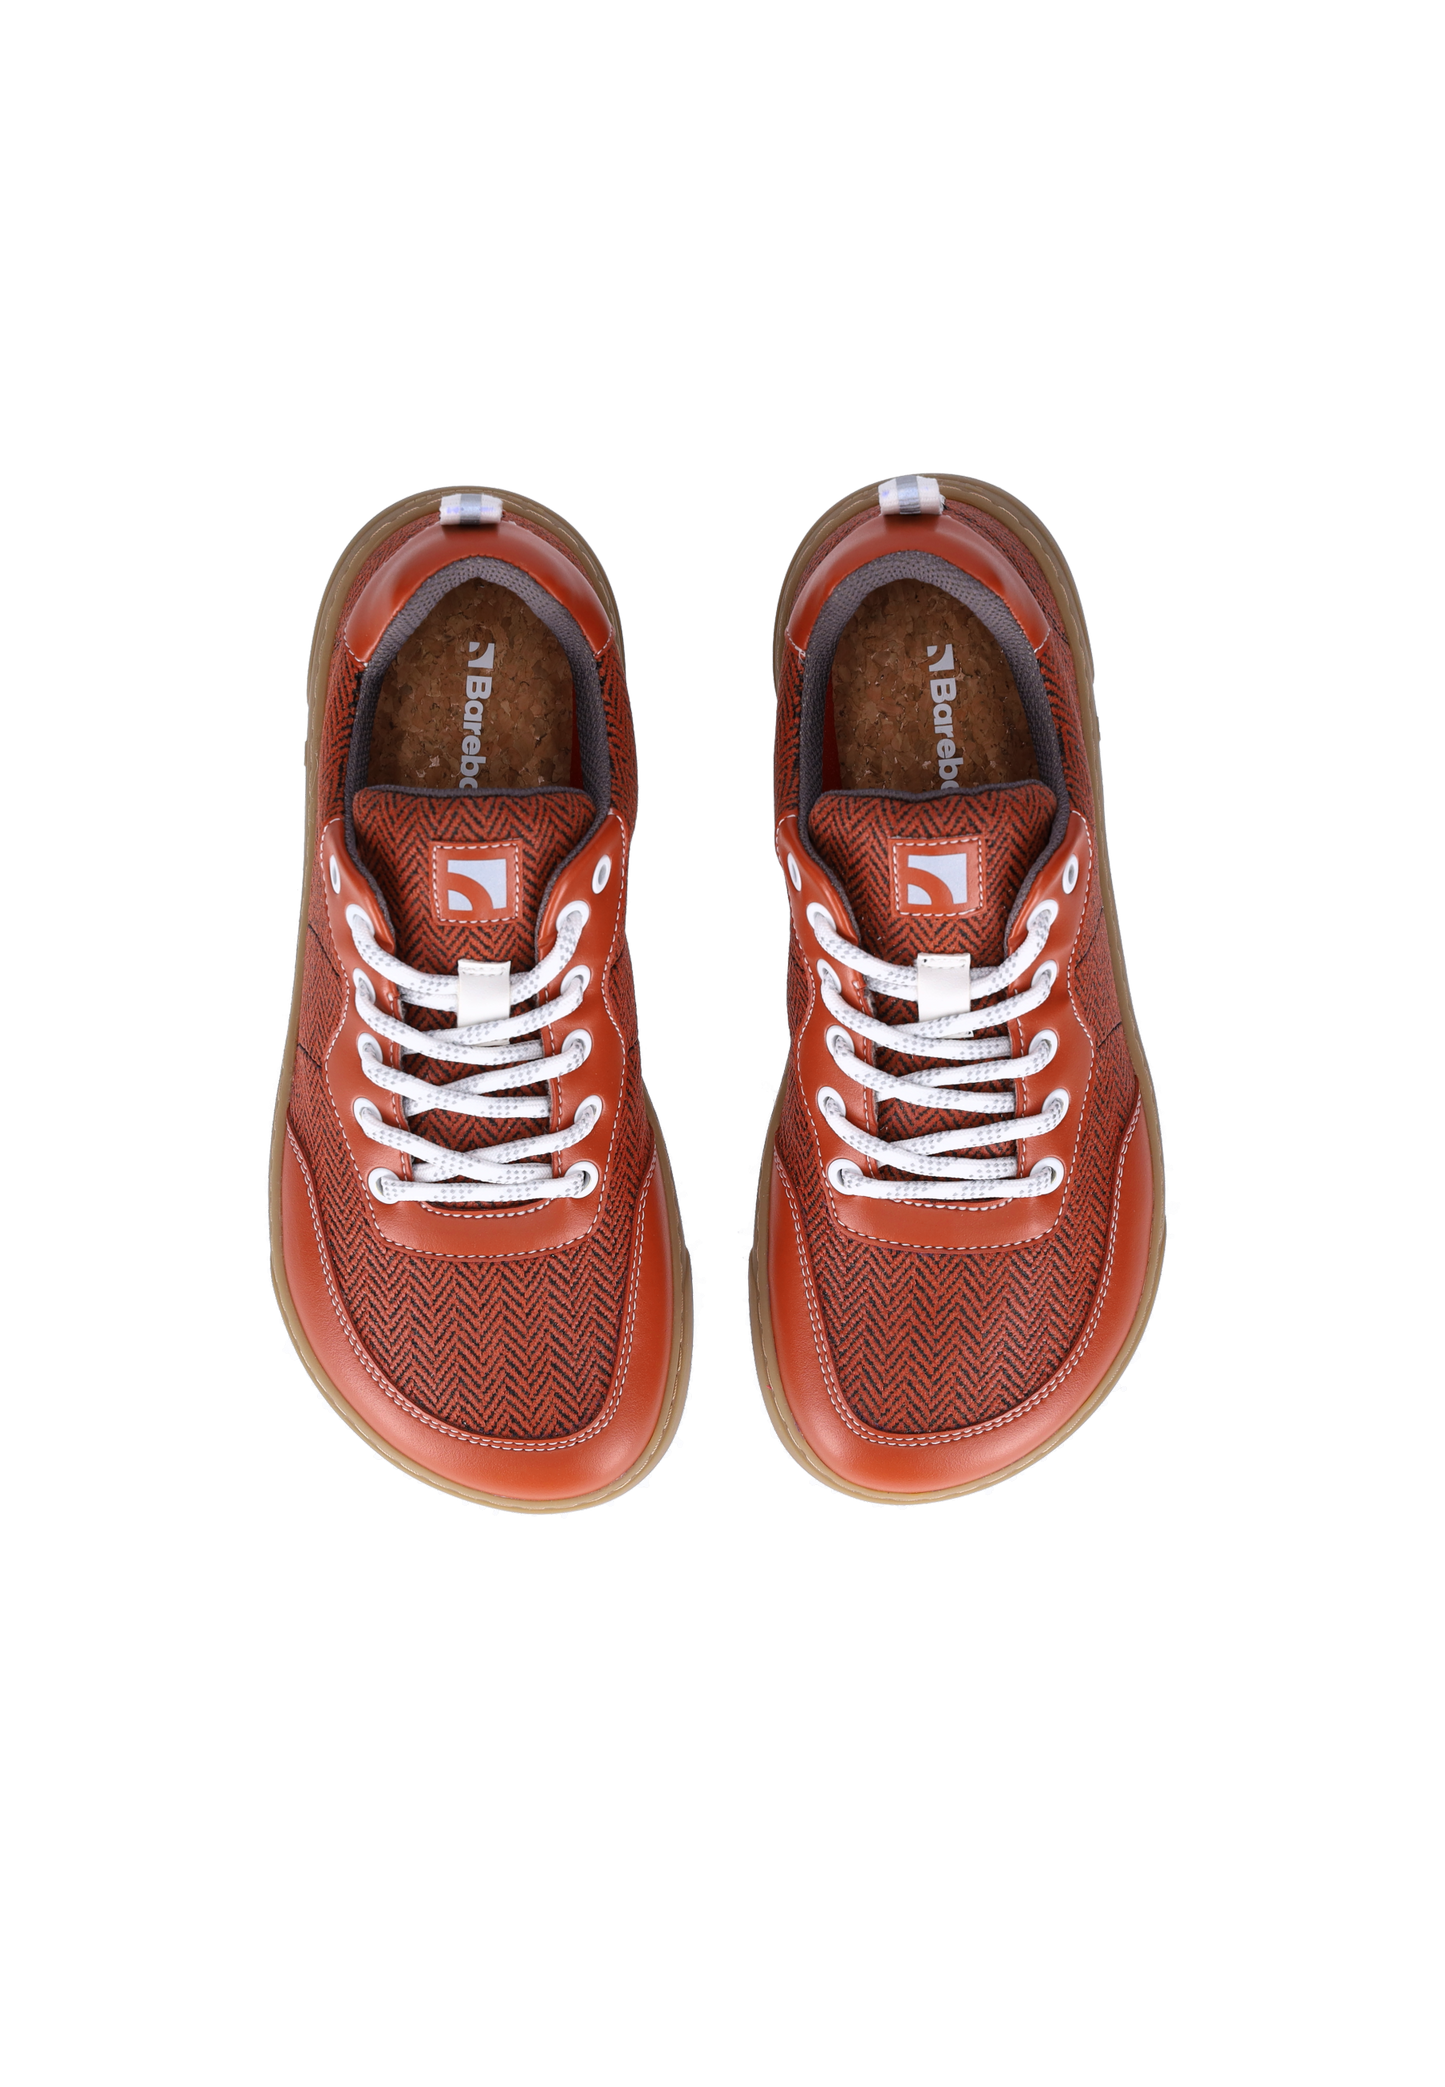 Barebarics Kudos Barefoot Sneakers - Brick Red